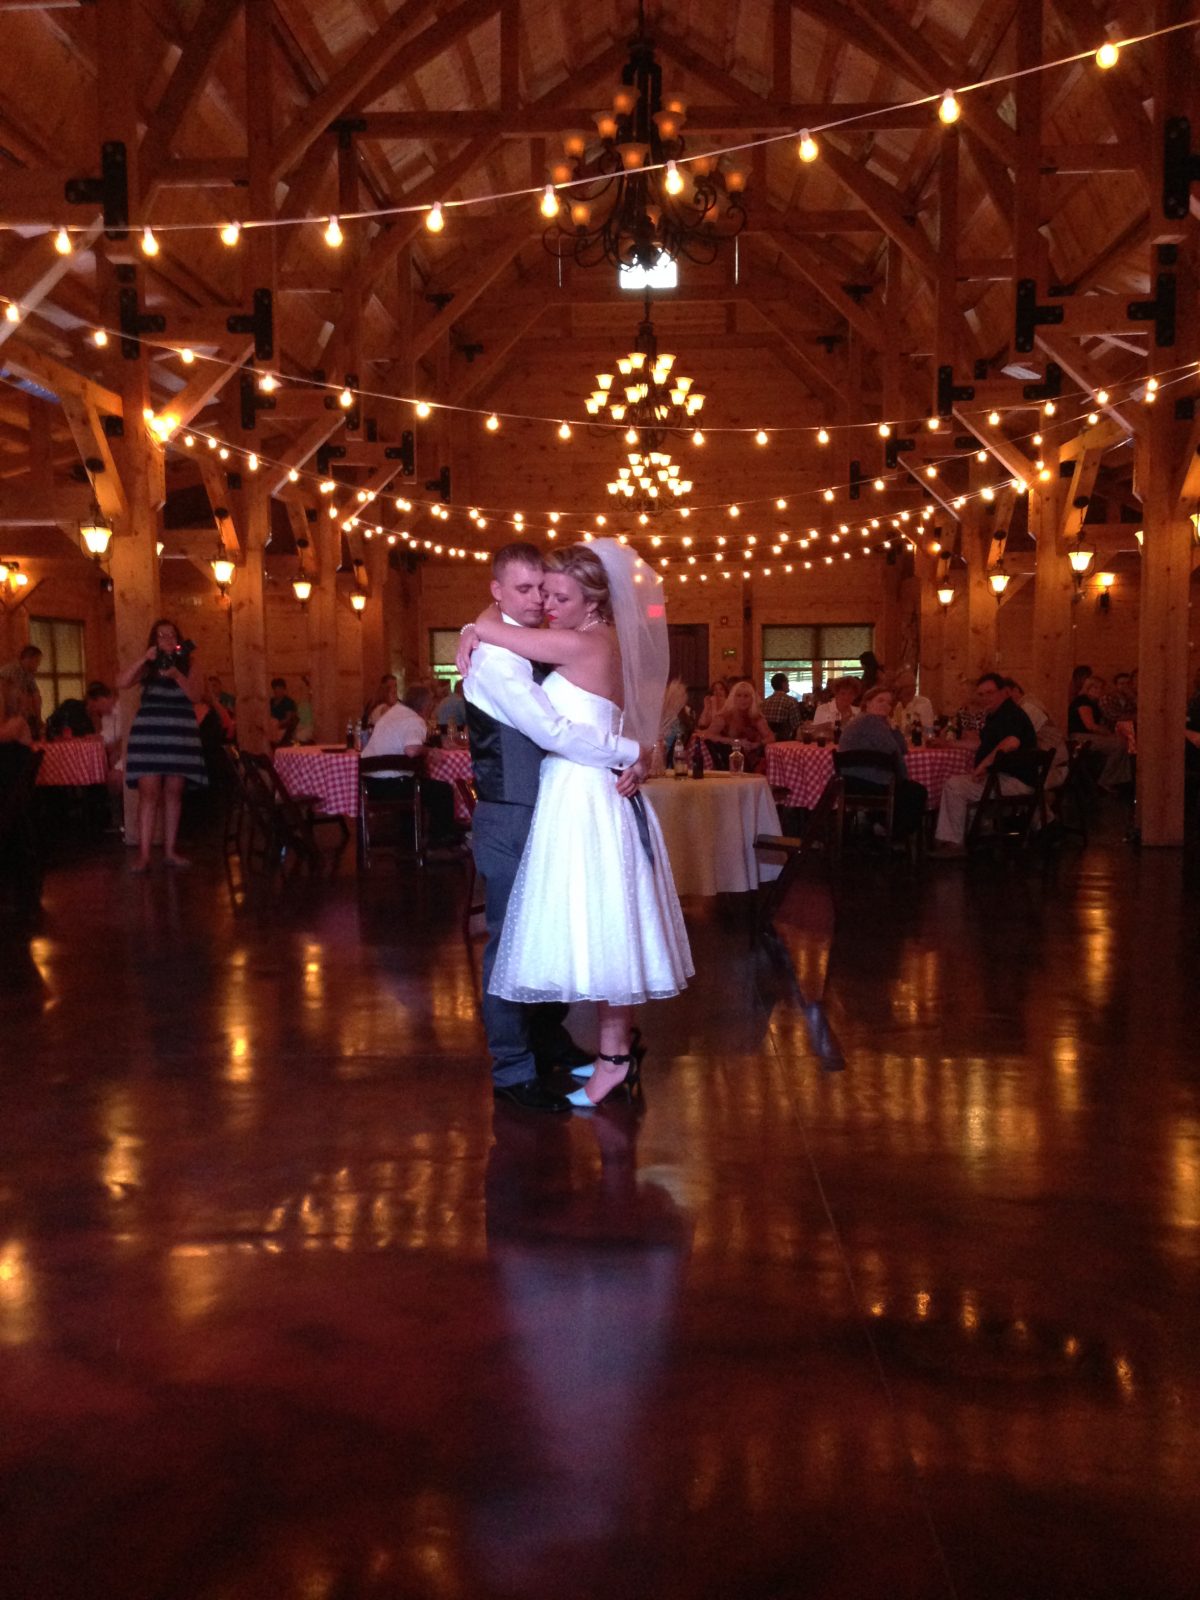 Dancing Couple at Rustic Wedding